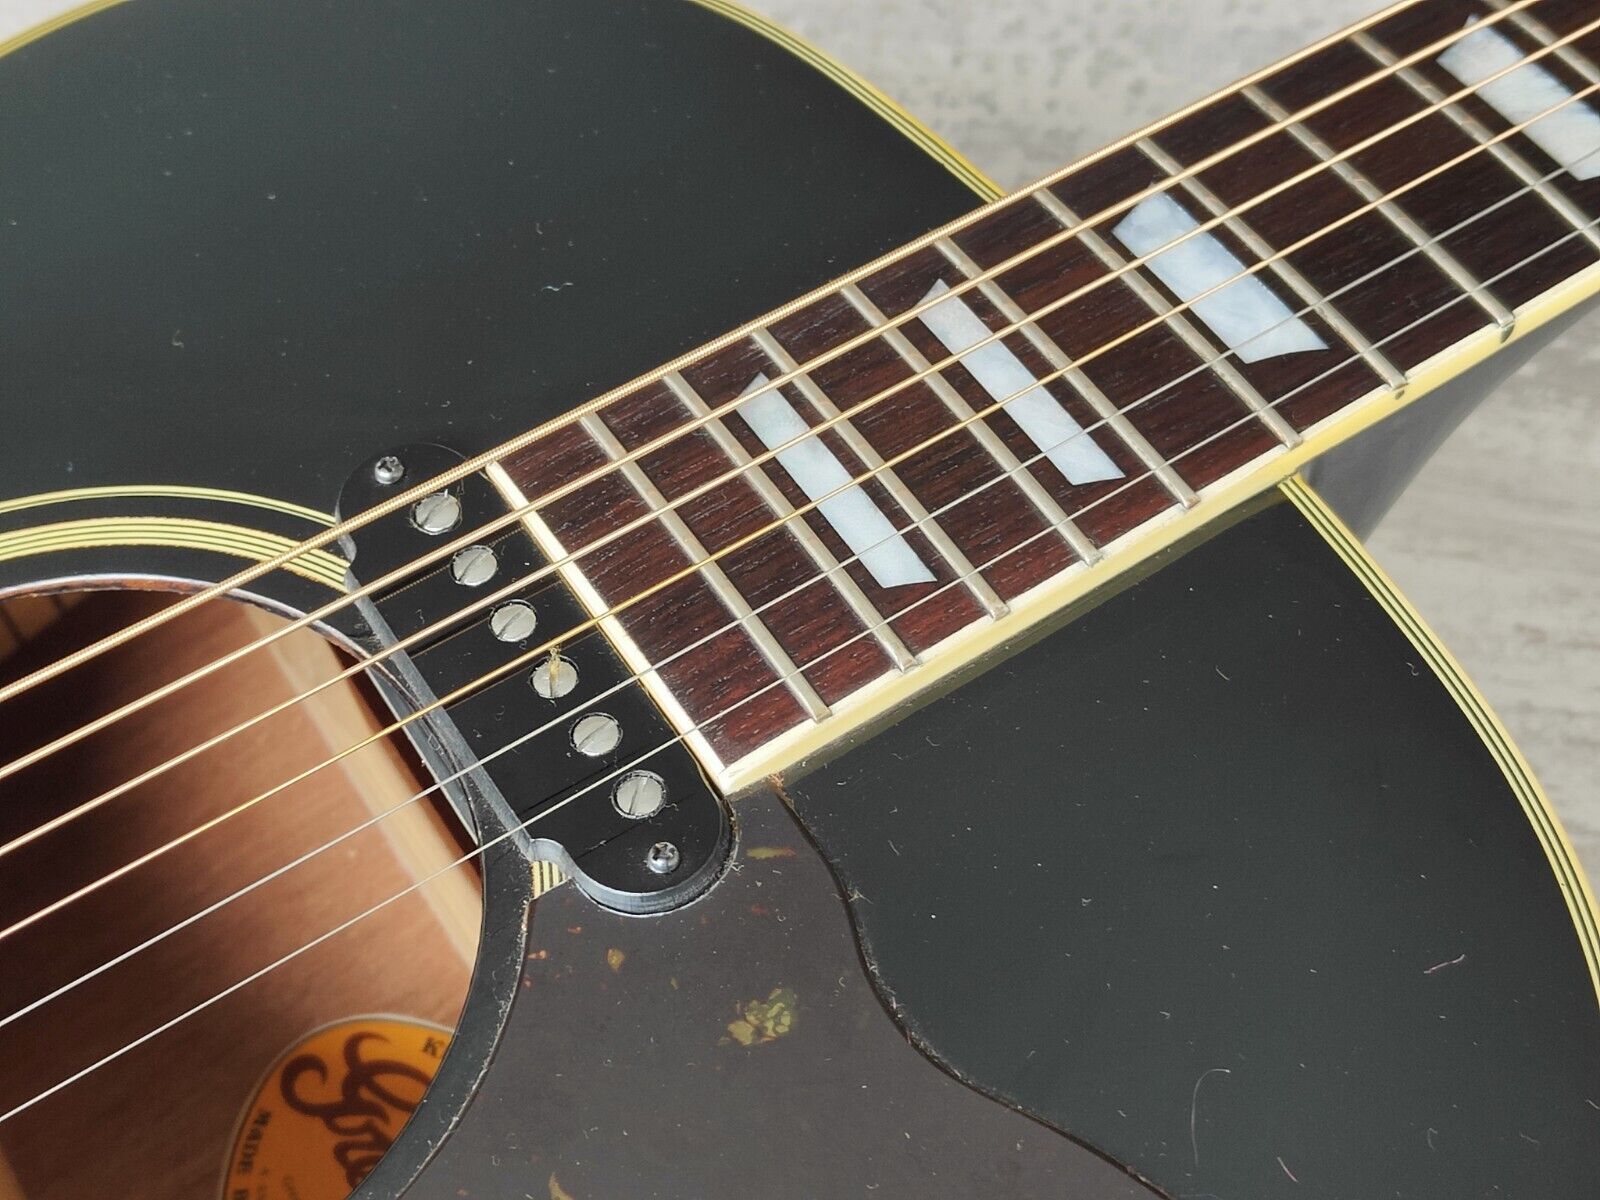 1981 Greco Japan W-404BSE Acoustic Guitar w/P90 Pickup (Brown Sunburst)